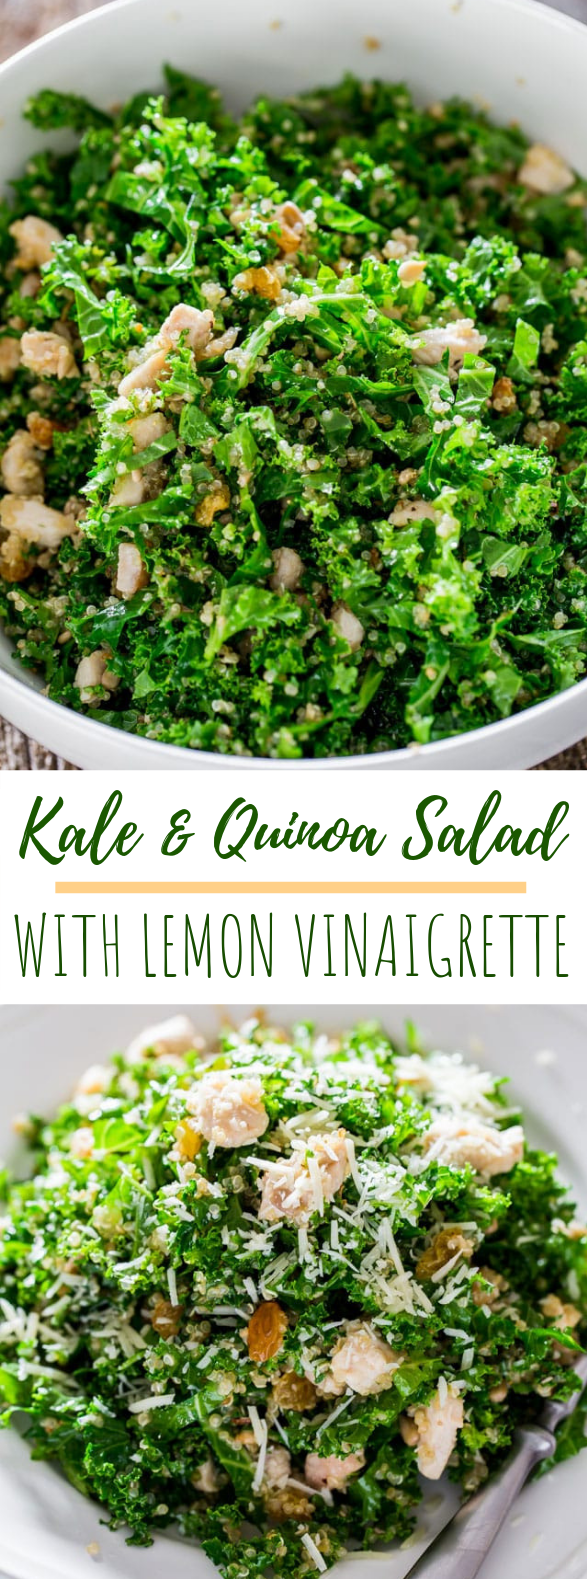 KALE AND QUINOA SALAD WITH LEMON VINAIGRETTE #vegetarian #salads